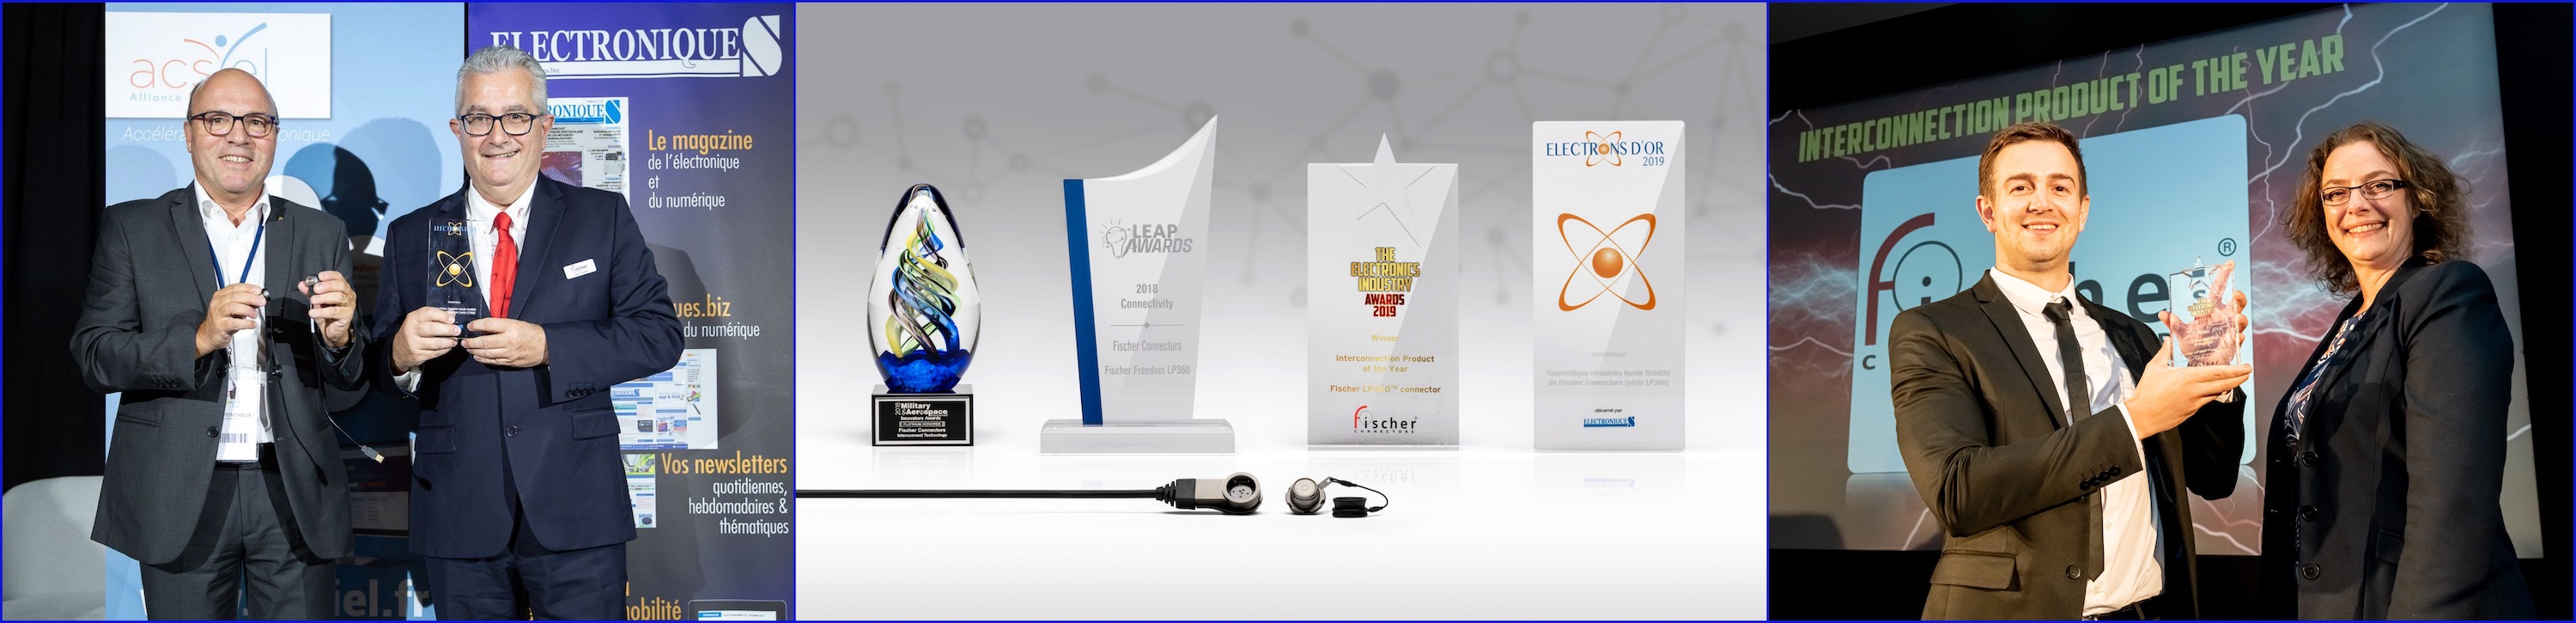 August 2019 Connector Industry News - Fischer Connectors LP360 Awards